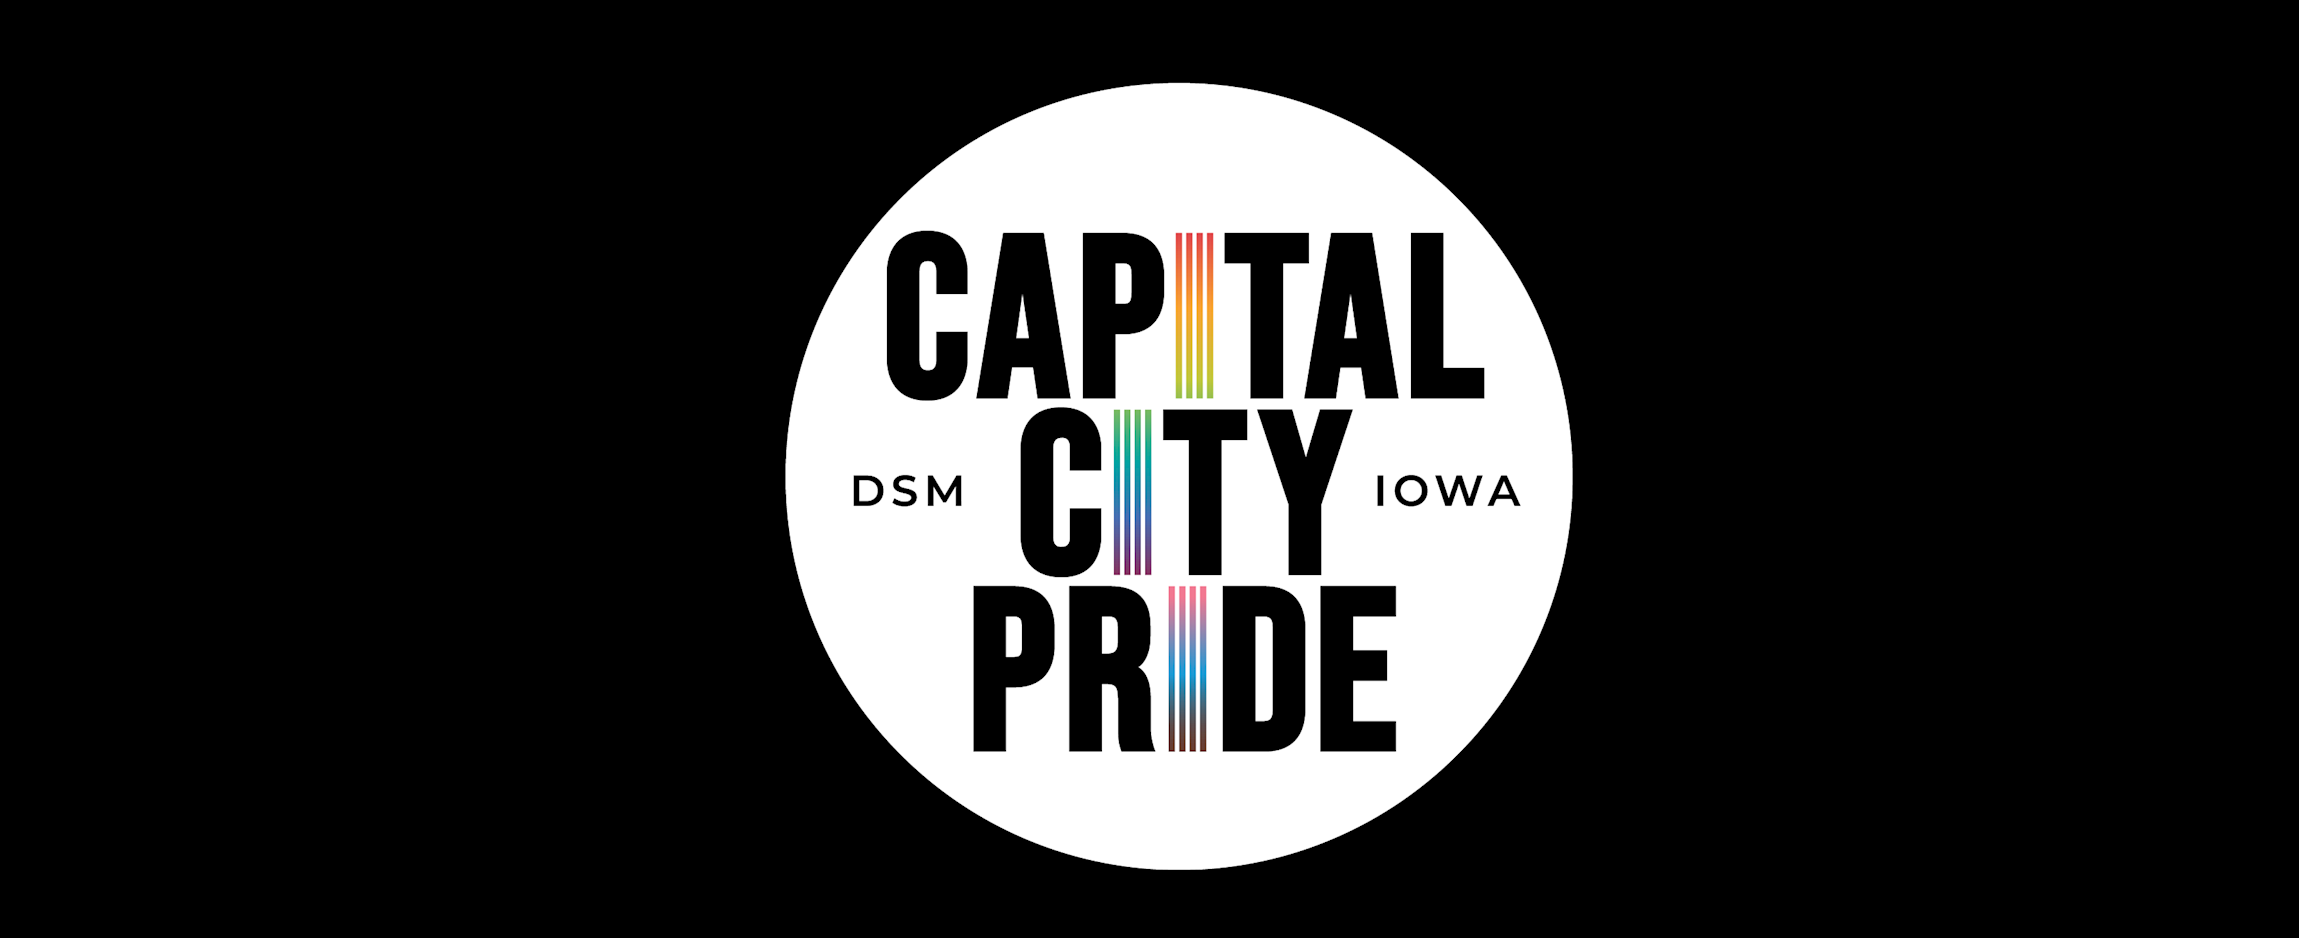 Capital City Pride Des Moines, IA